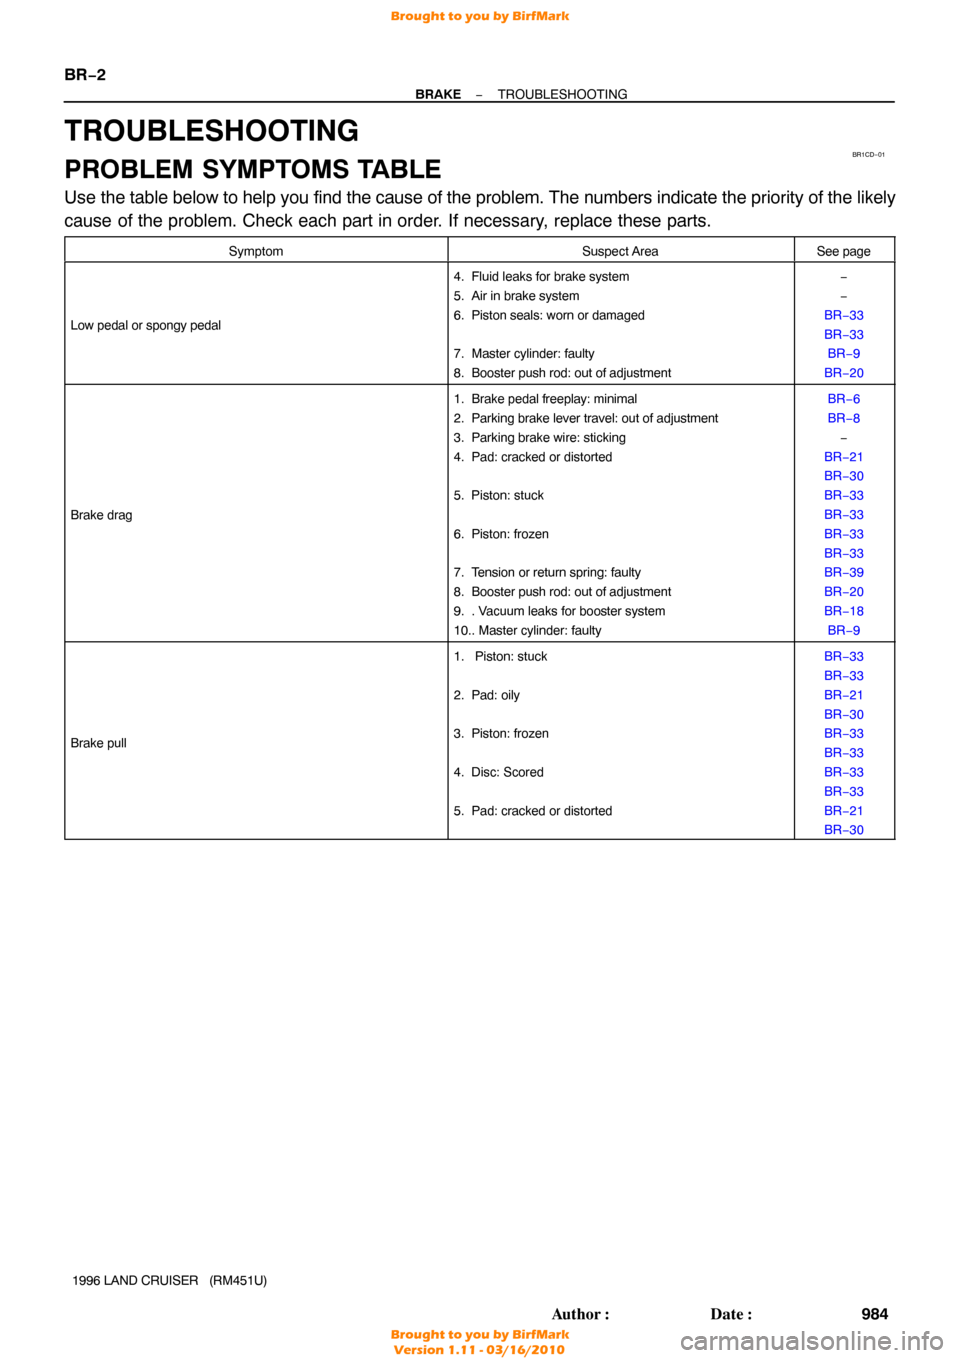 TOYOTA LAND CRUISER 1996 J80 Workshop Manual BR1CD−01
BR−2
−
BRAKE TROUBLESHOOTING
984
Author: Date:
1996 LAND CRUISER   (RM451U)
TROUBLESHOOTING
PROBLEM SYMPTOMS TABLE
Use the table below to help you find the cause of the problem. The n